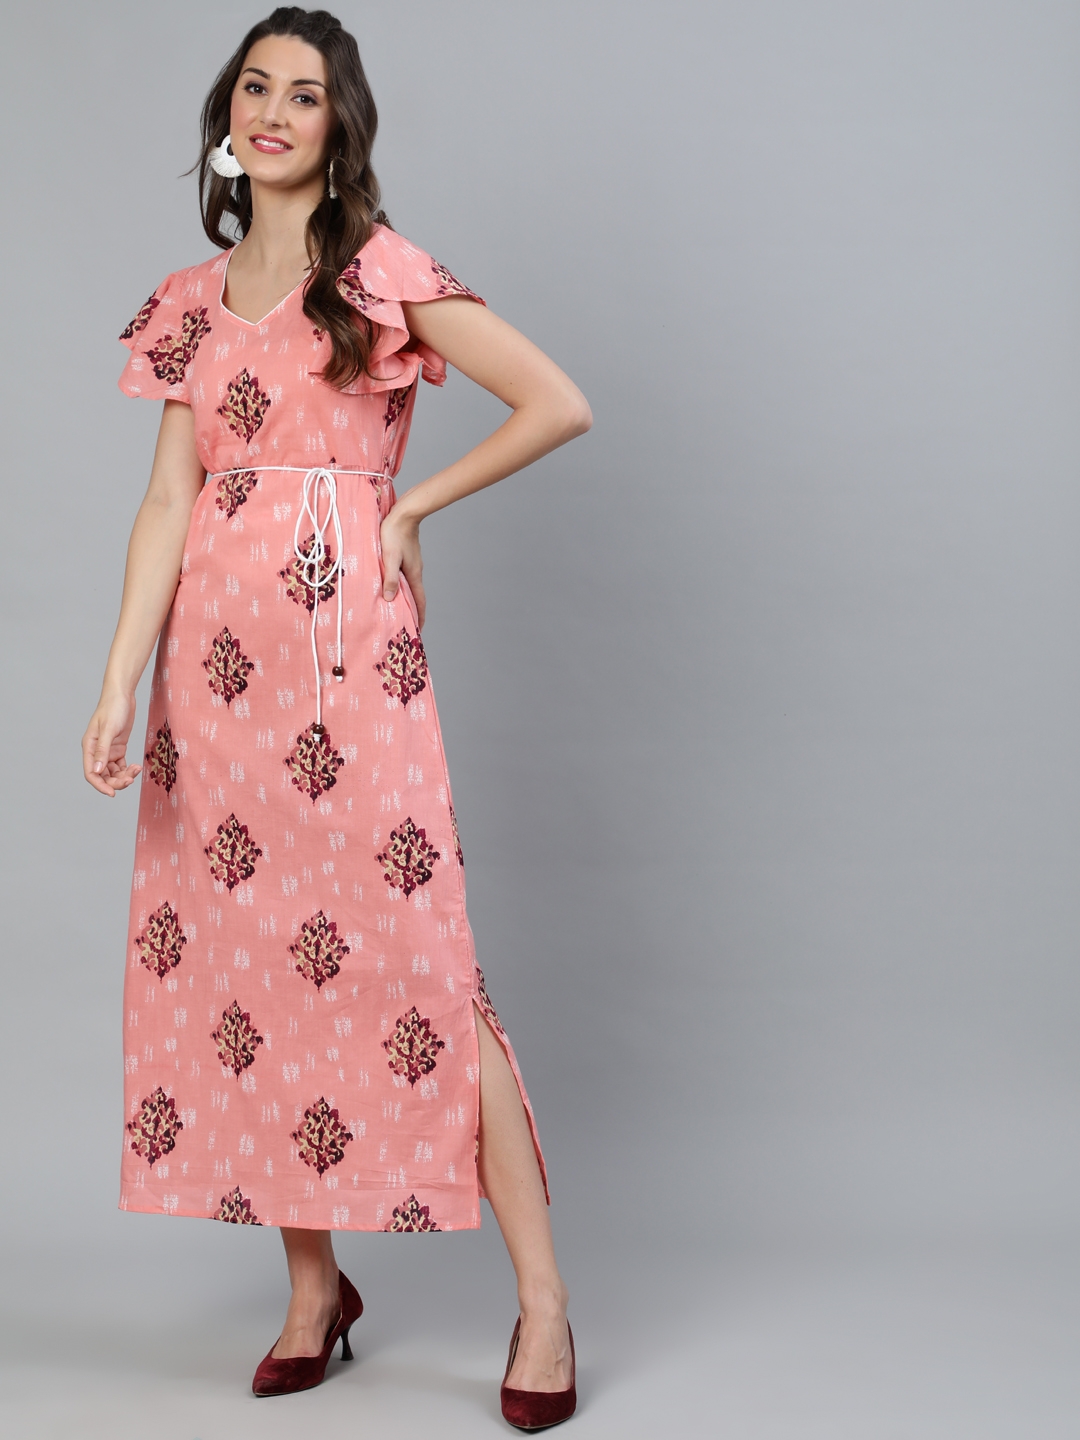 ANTARAN | Peach Floral Printed Long Dress With Ruffle Sleeve